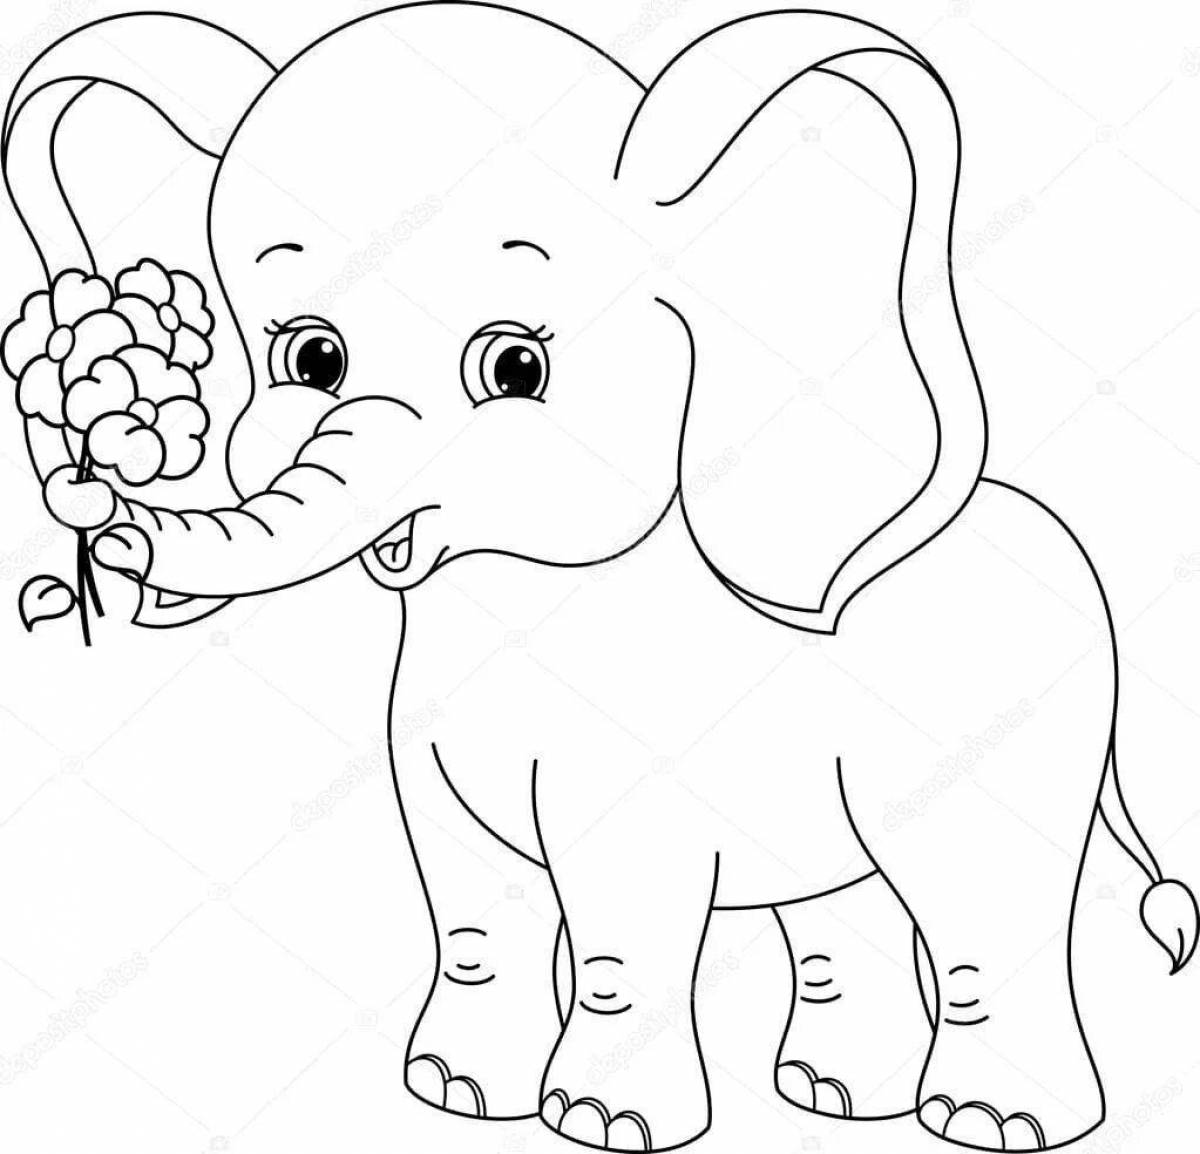 Cute elephant coloring book